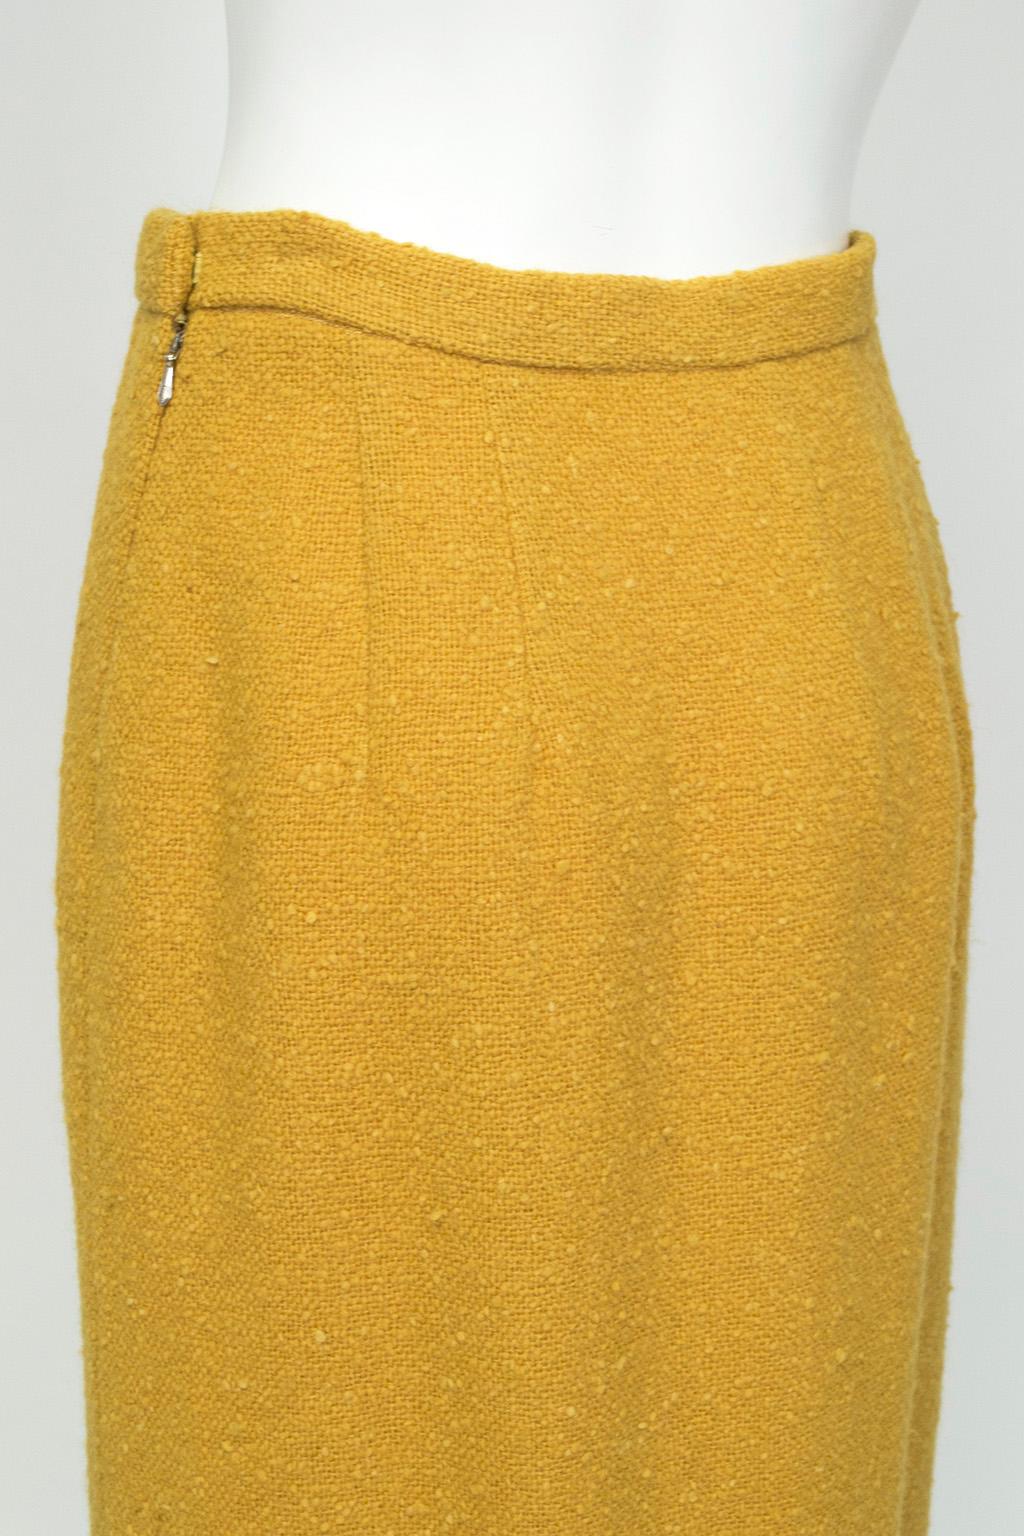 Brown Digby Morton Mustard Wool Bouclé Maximalist Appliqué Novelty Skirt - M, 1960s For Sale